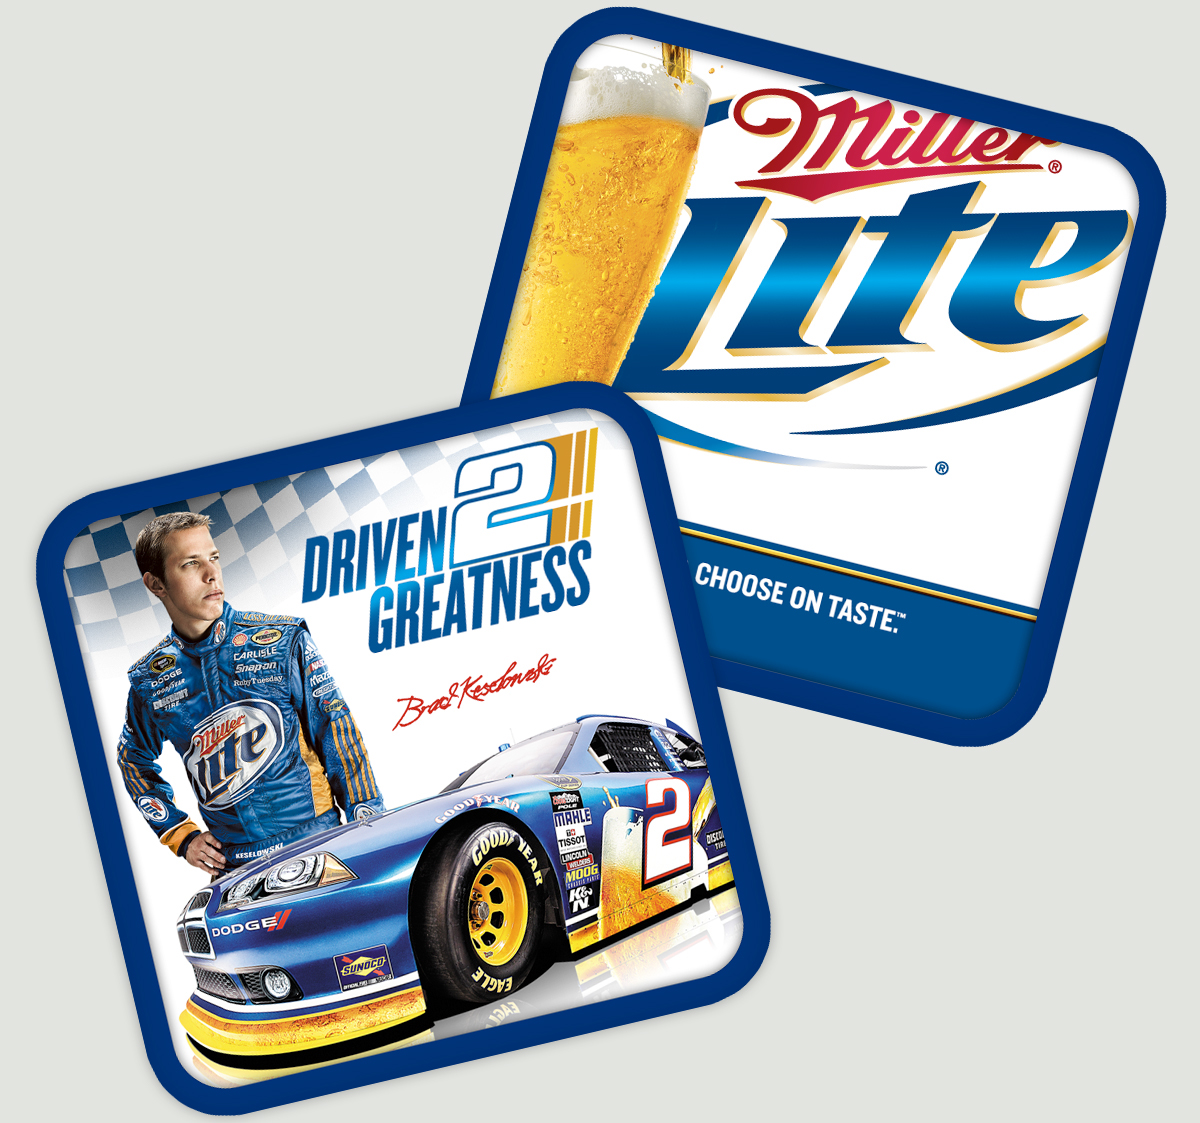 Adobe Portfolio shopper marketing miller lite NASCAR Brad Keselowski pos pop on-premise graphic design  art direction  Racing